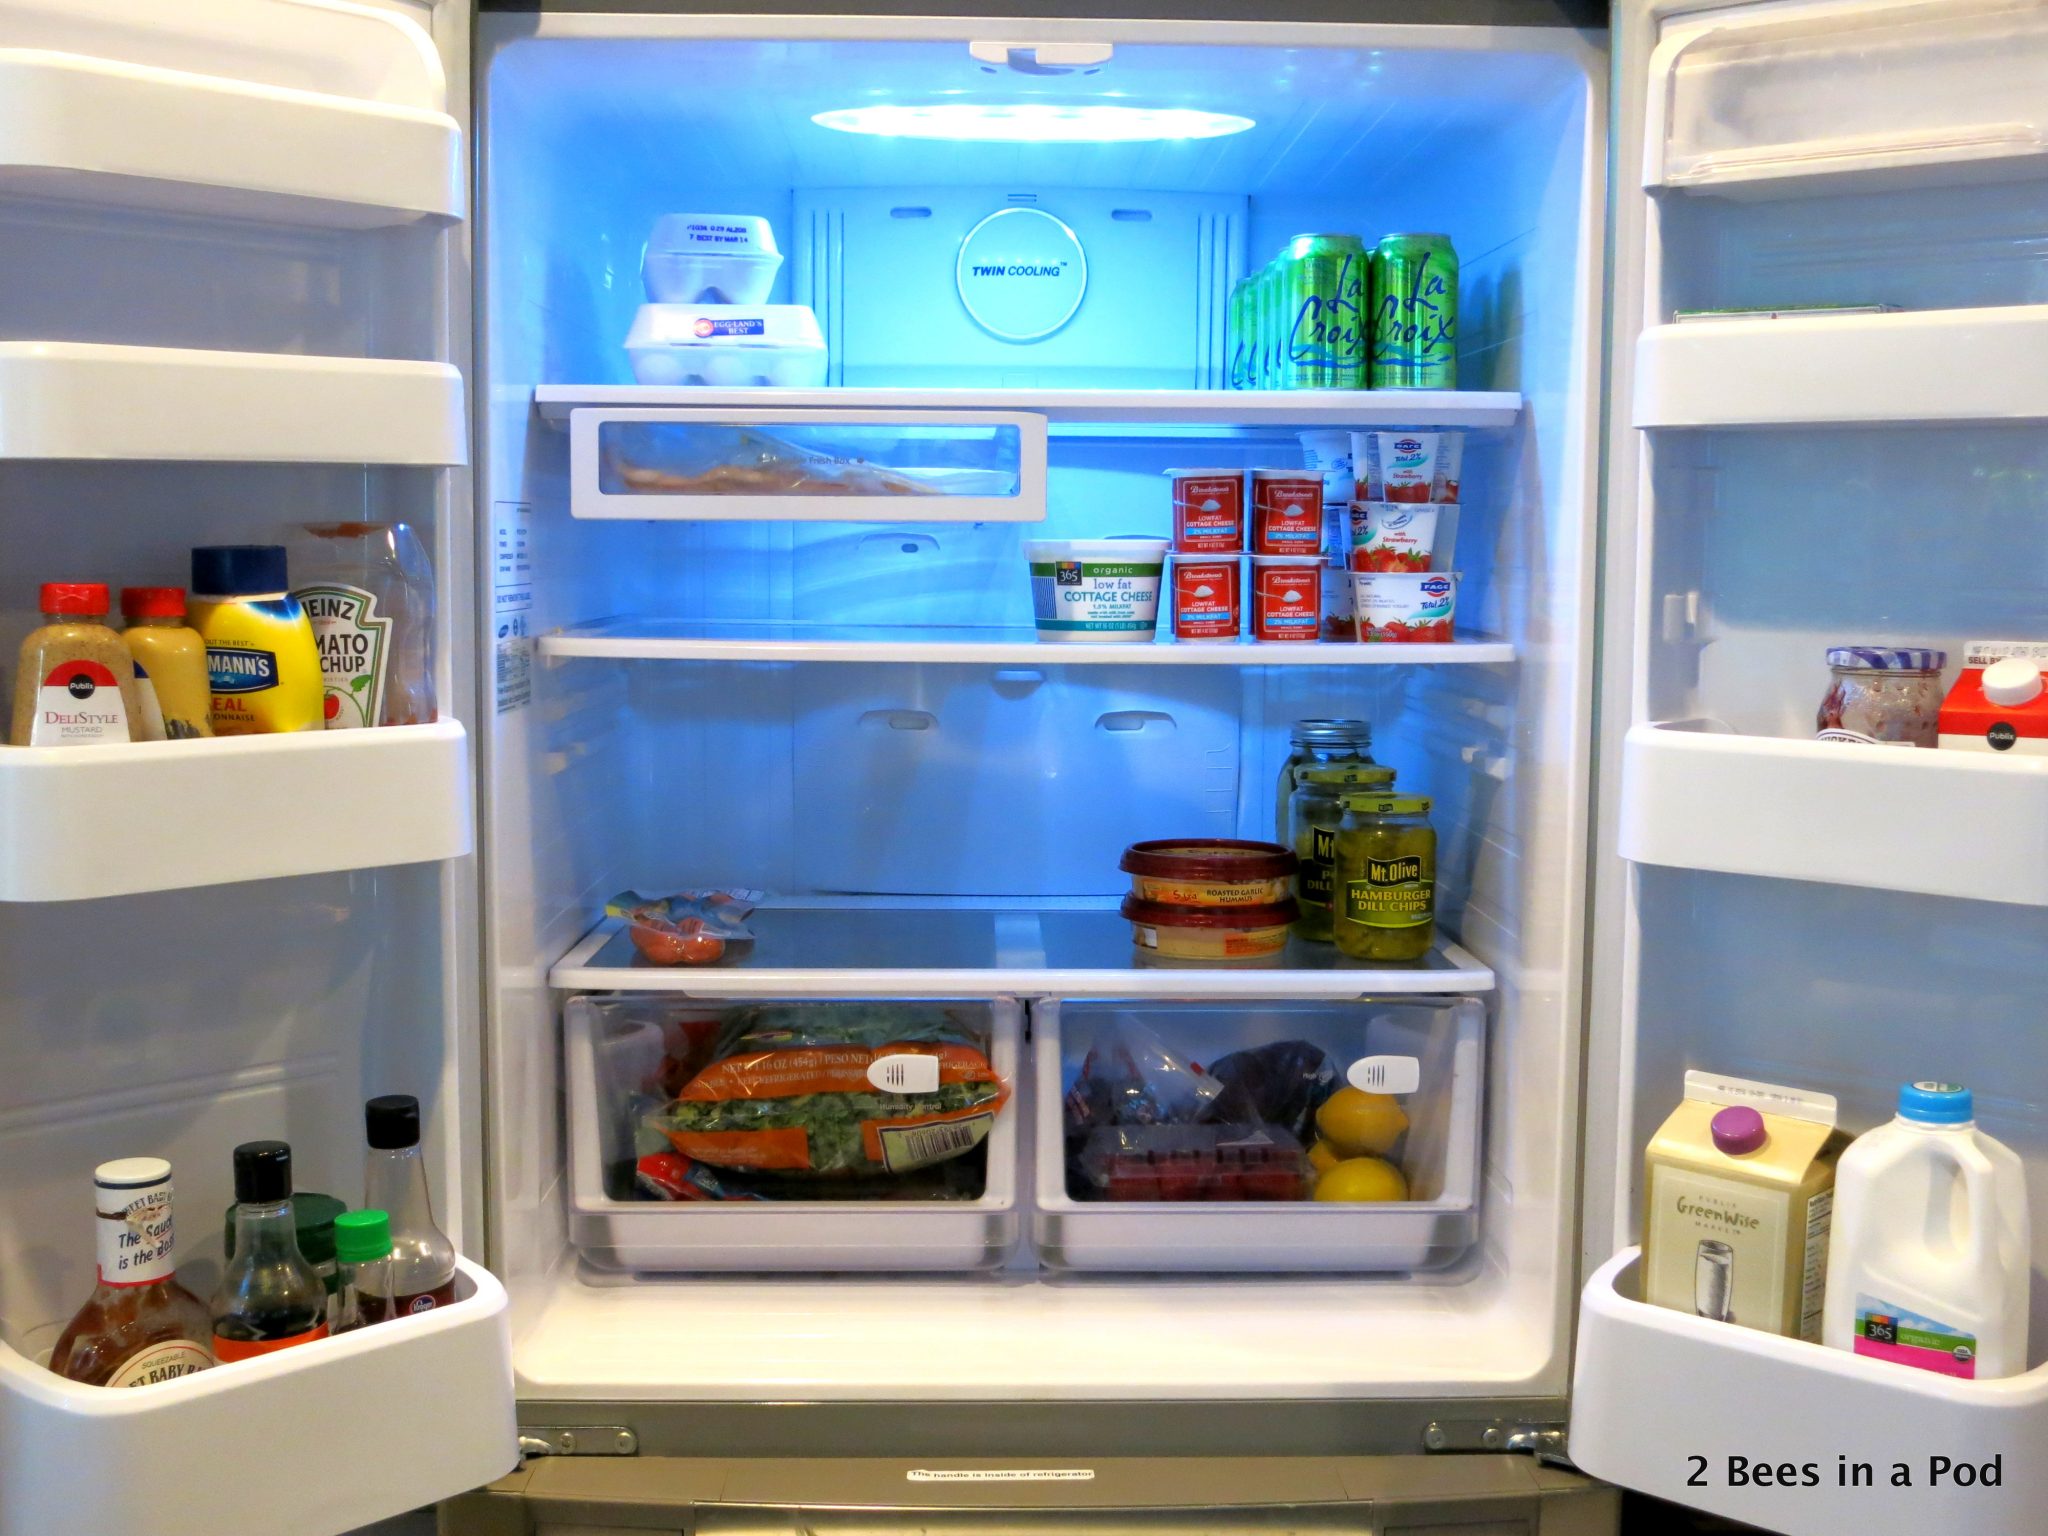 Organized Refrigerator